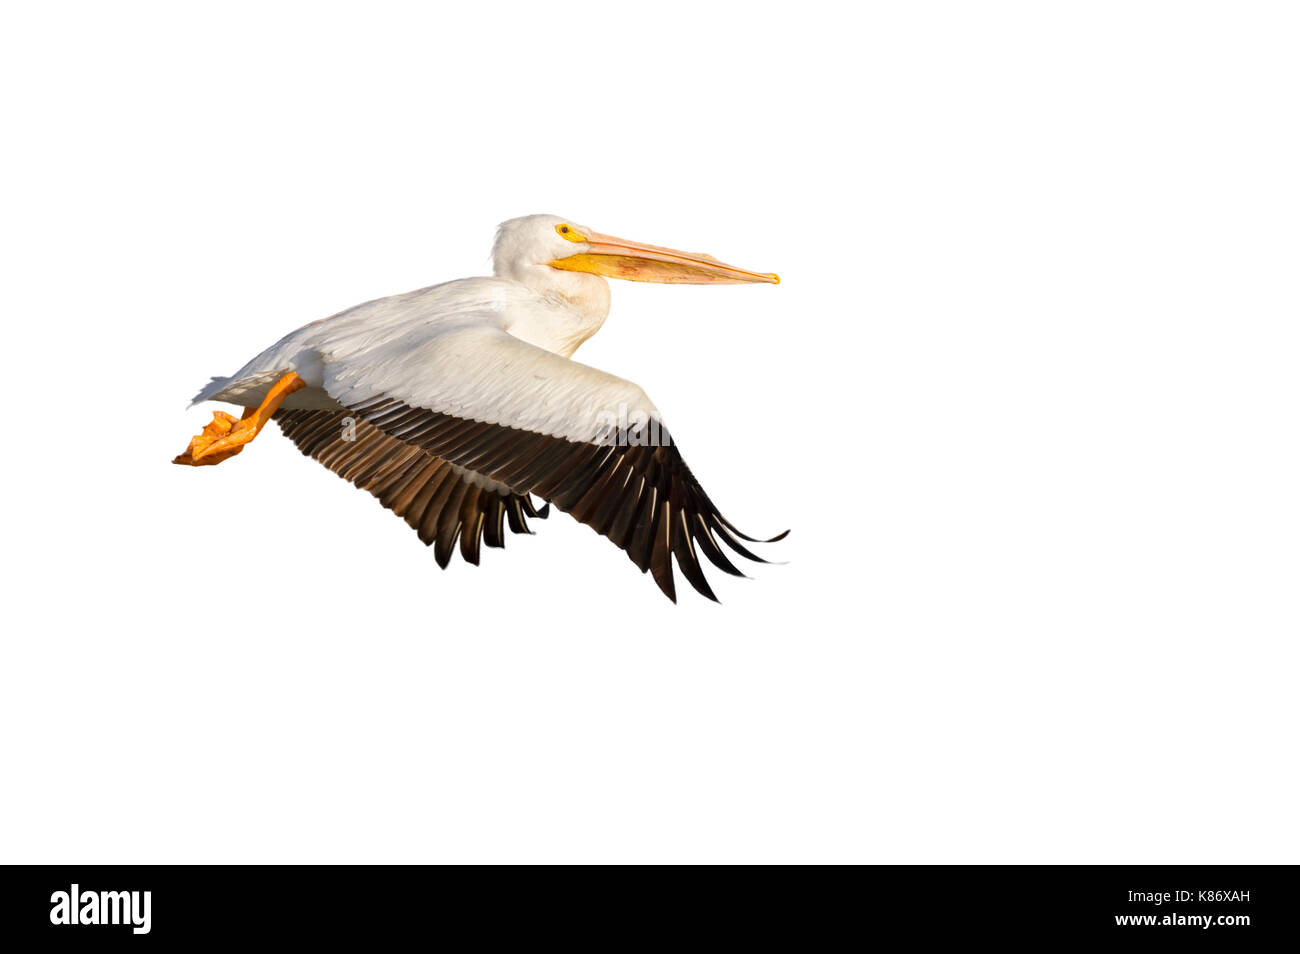 American white pelican (Pelecanus erythrorhynchos) flying, isolated on white background. Stock Photo